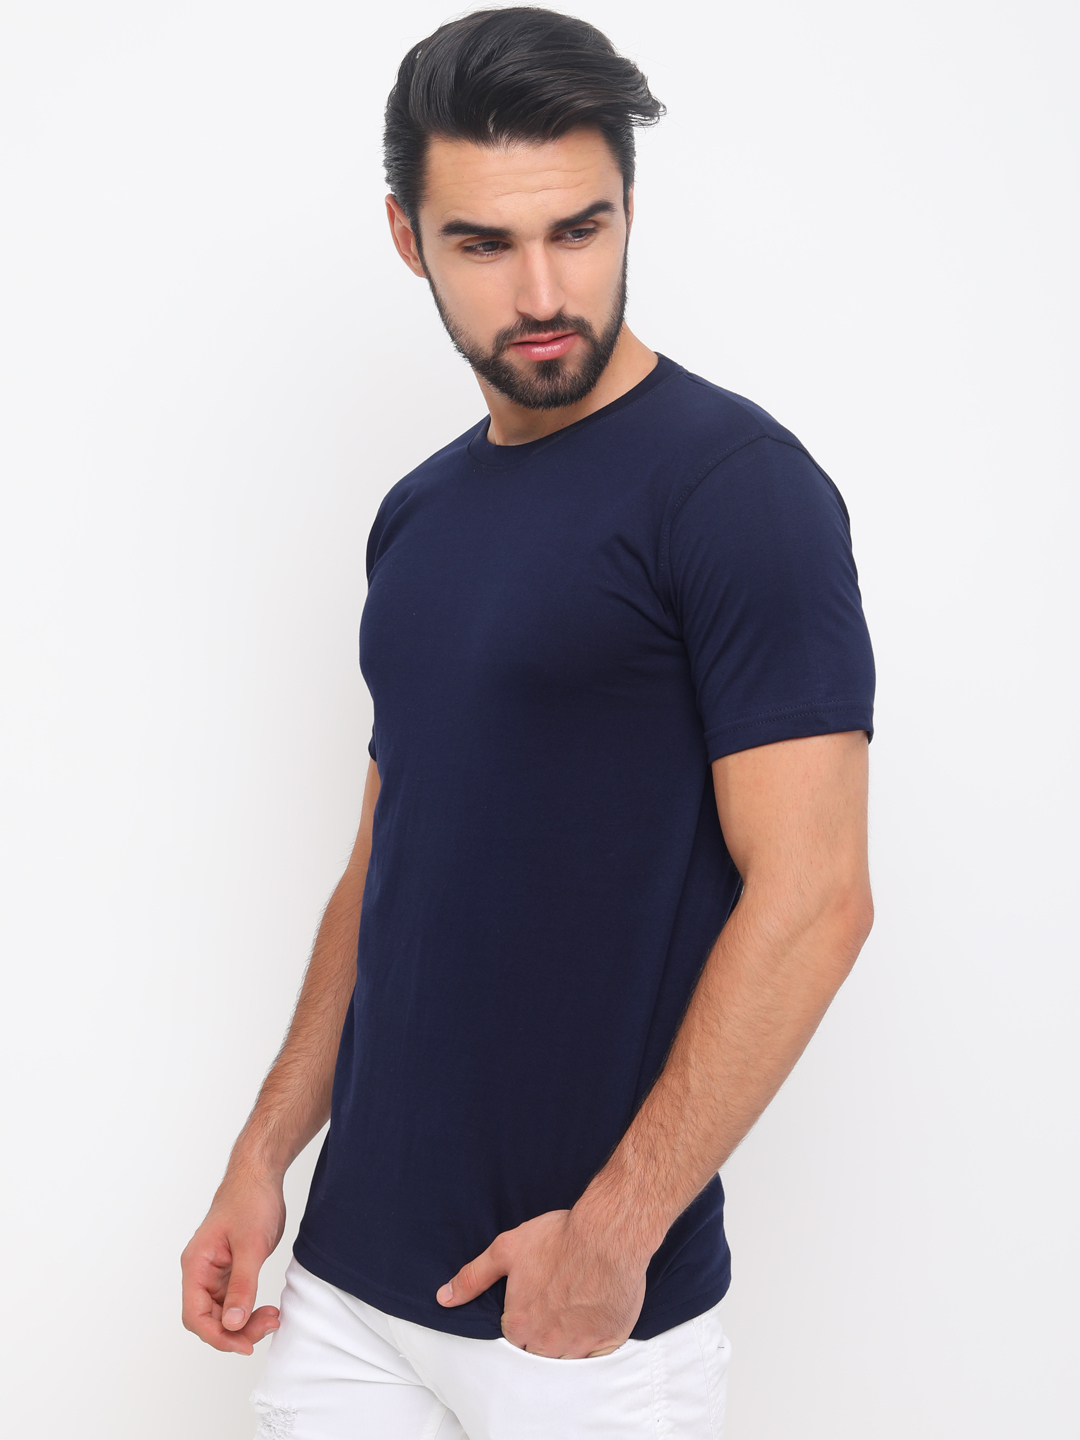 Navy Blue Plain T shirts